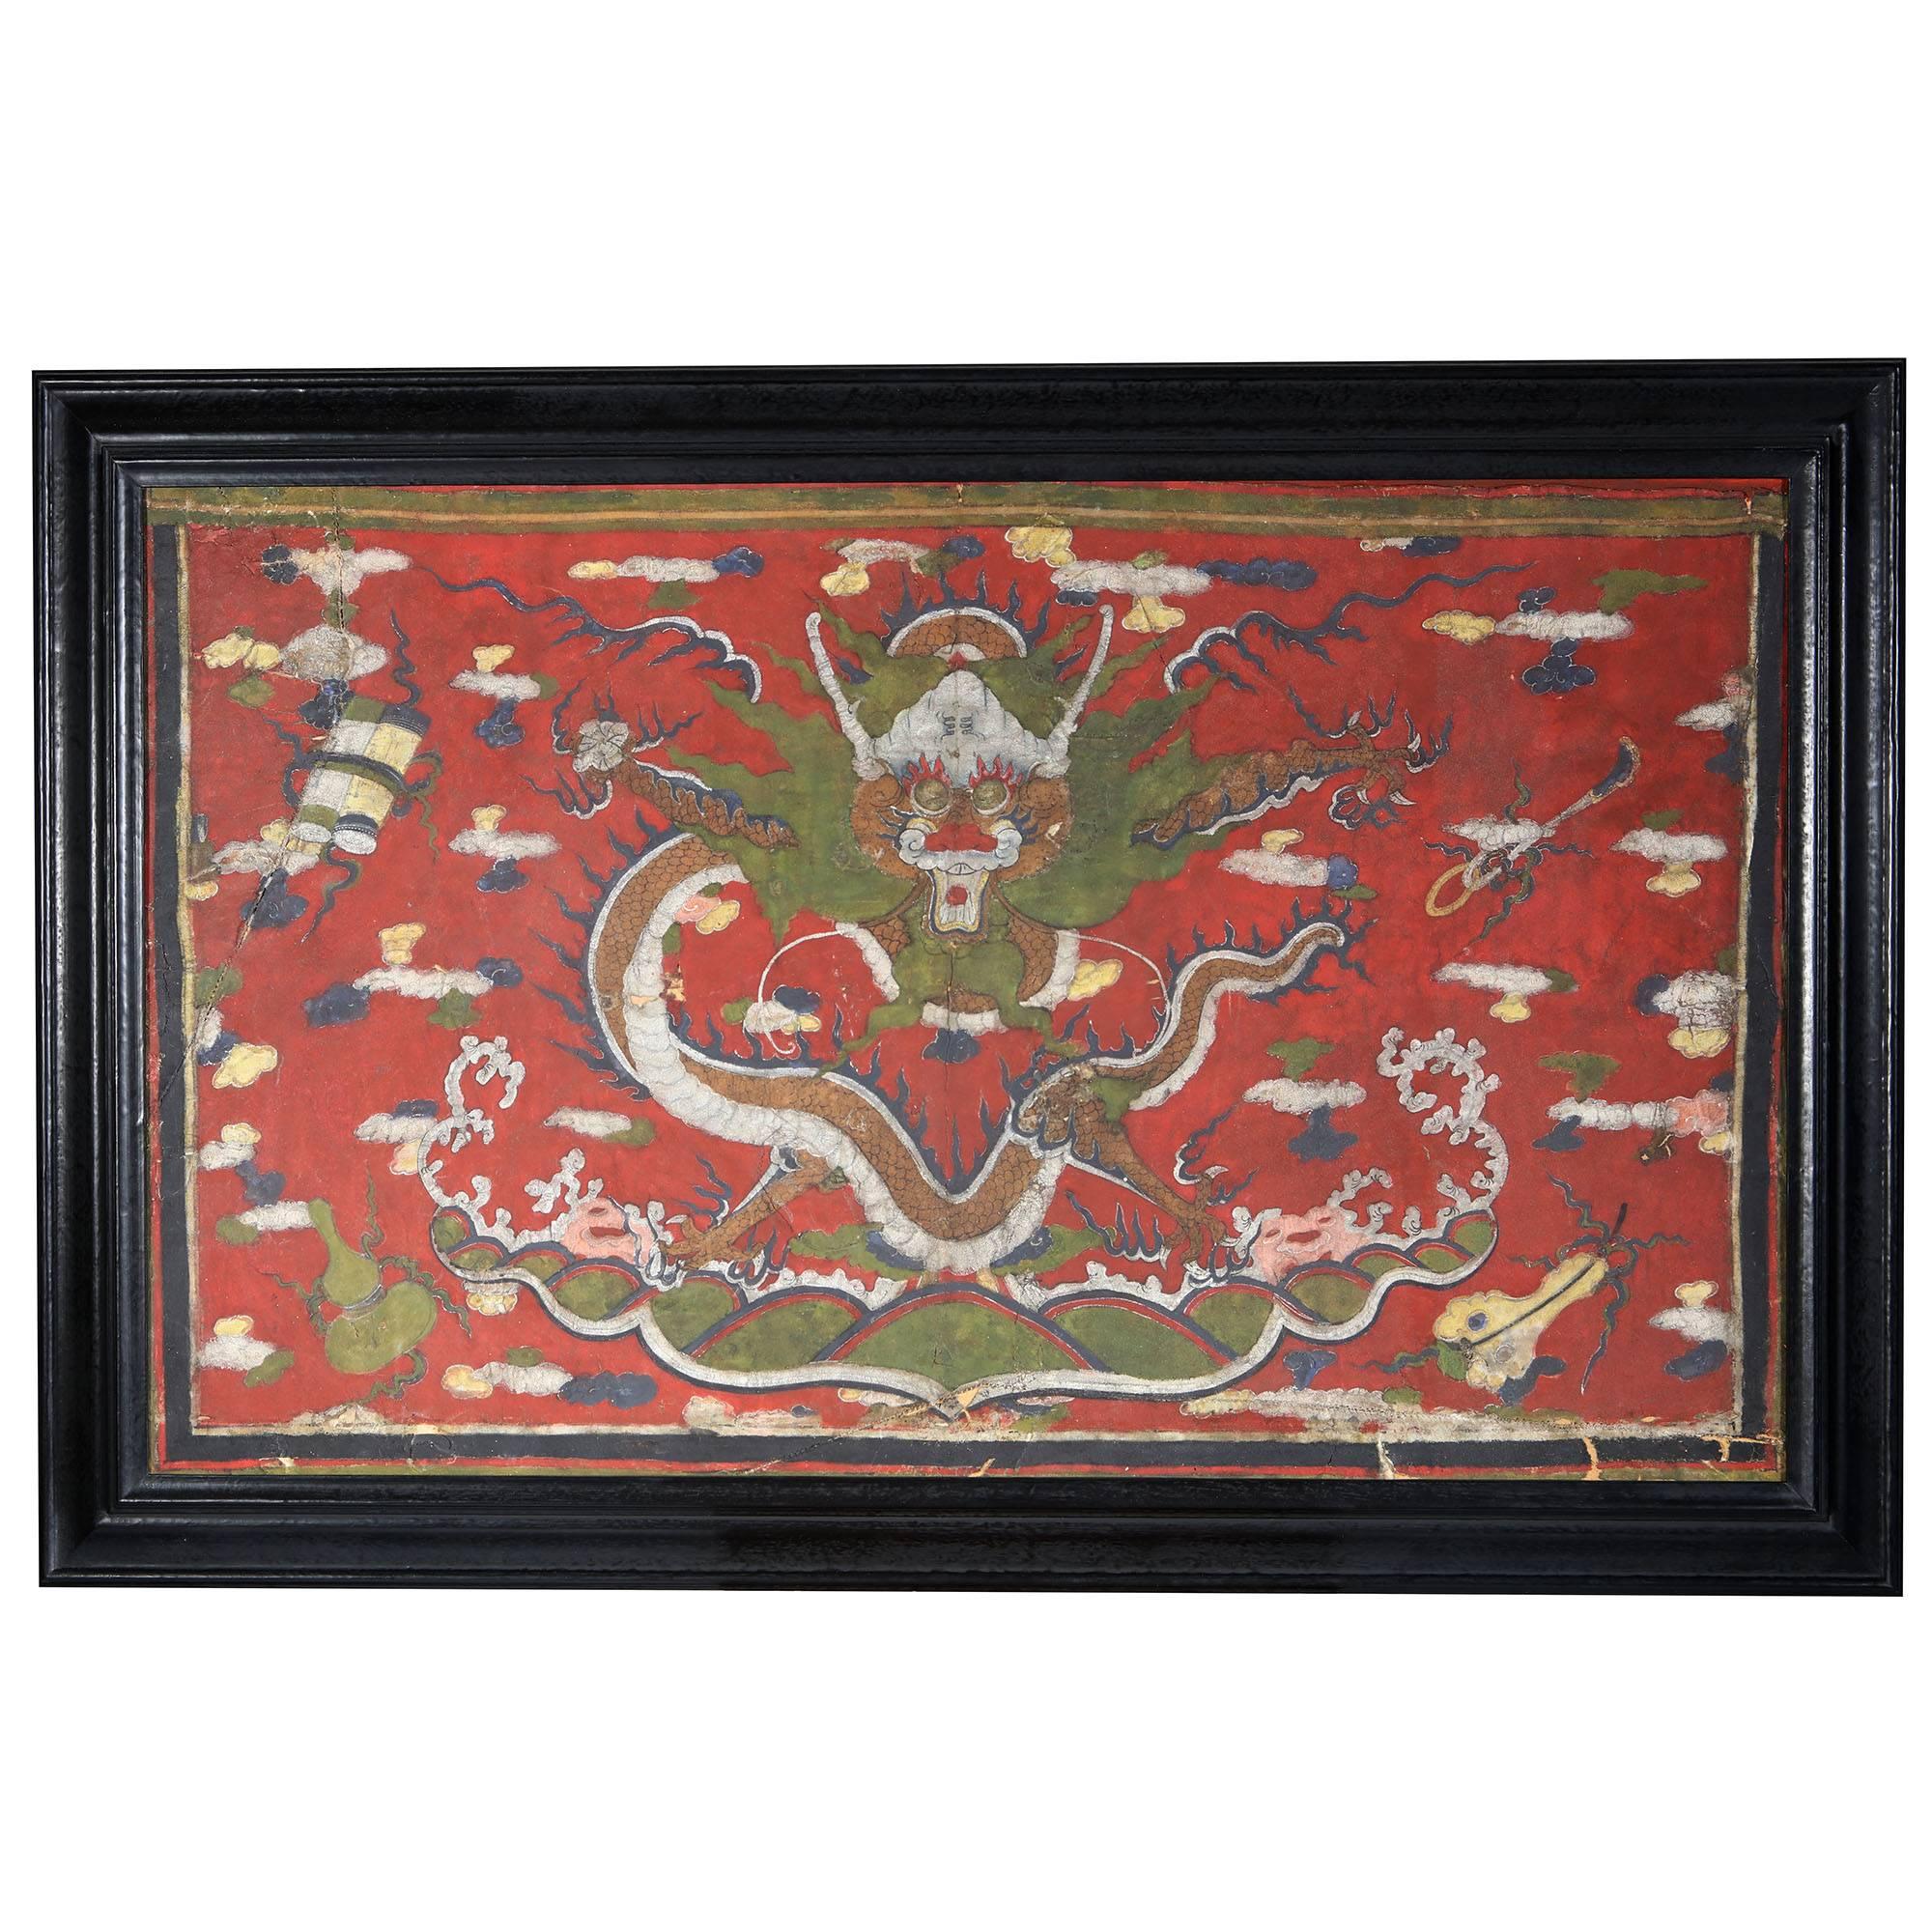 Tibetan Mythological Red Dragon Painting on Vellum